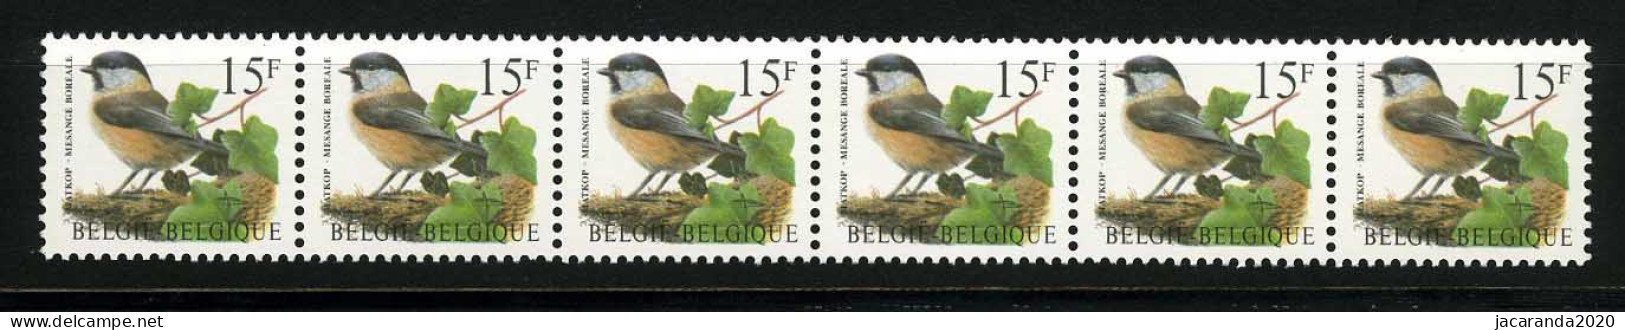 België R81a - Vogels - Oiseaux - Buzin (2732) - Strook Van 6 ZONDER NUMMER - SANS NUMERO - ZELDZAAM - RARE - LUXE - Francobolli In Bobina